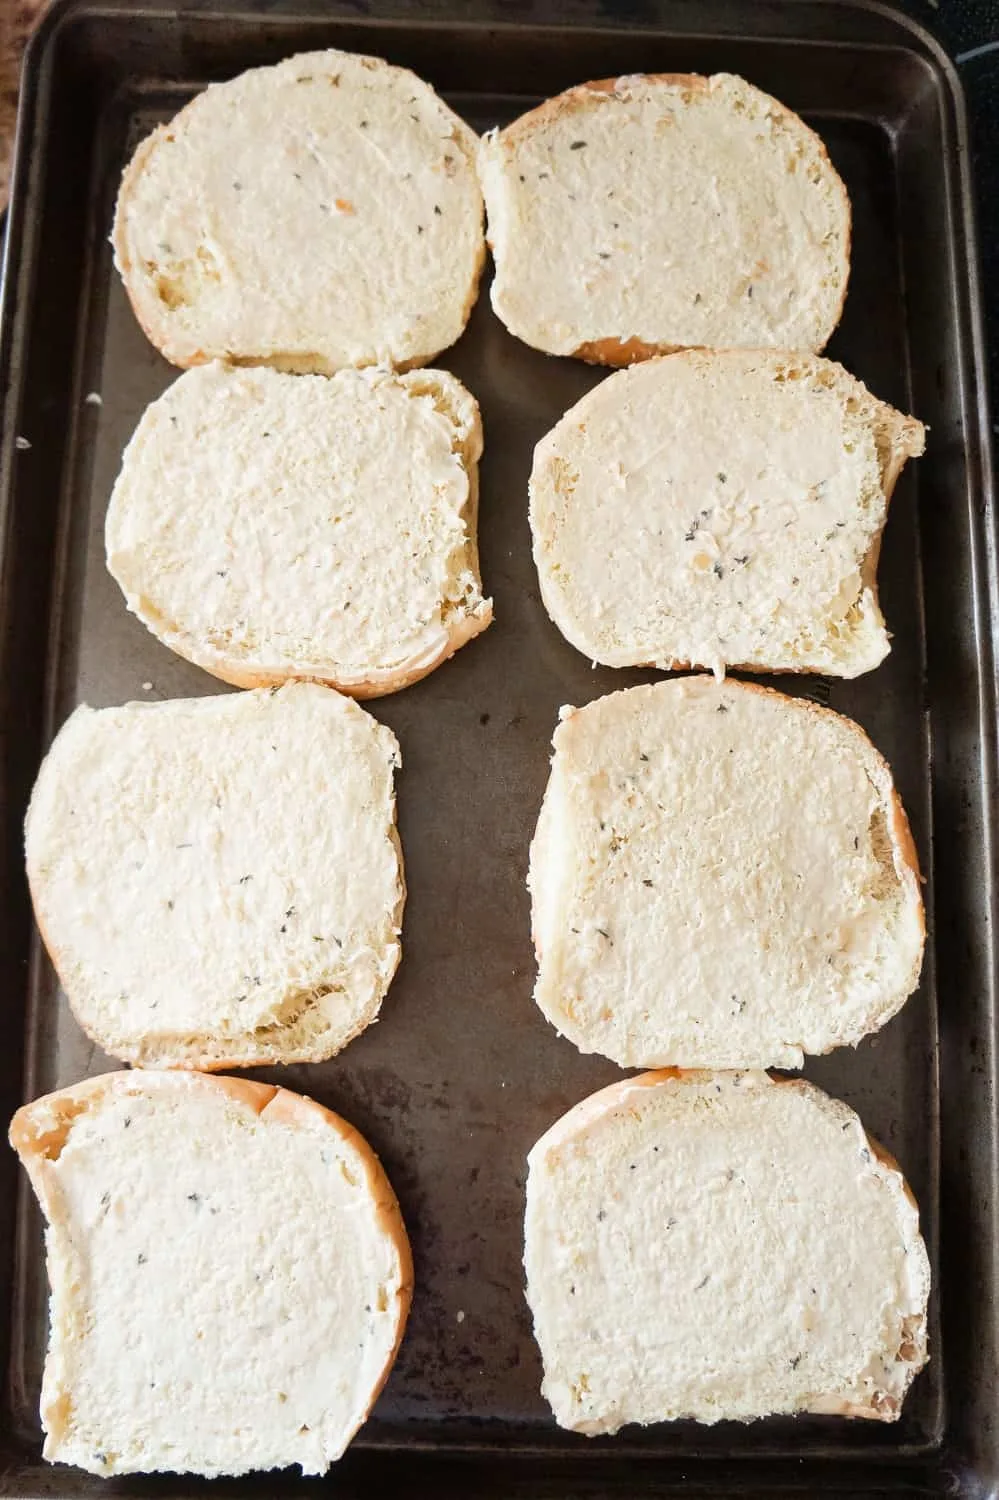 hamburger buns spread with garlic margarine and laying on a baking sheet